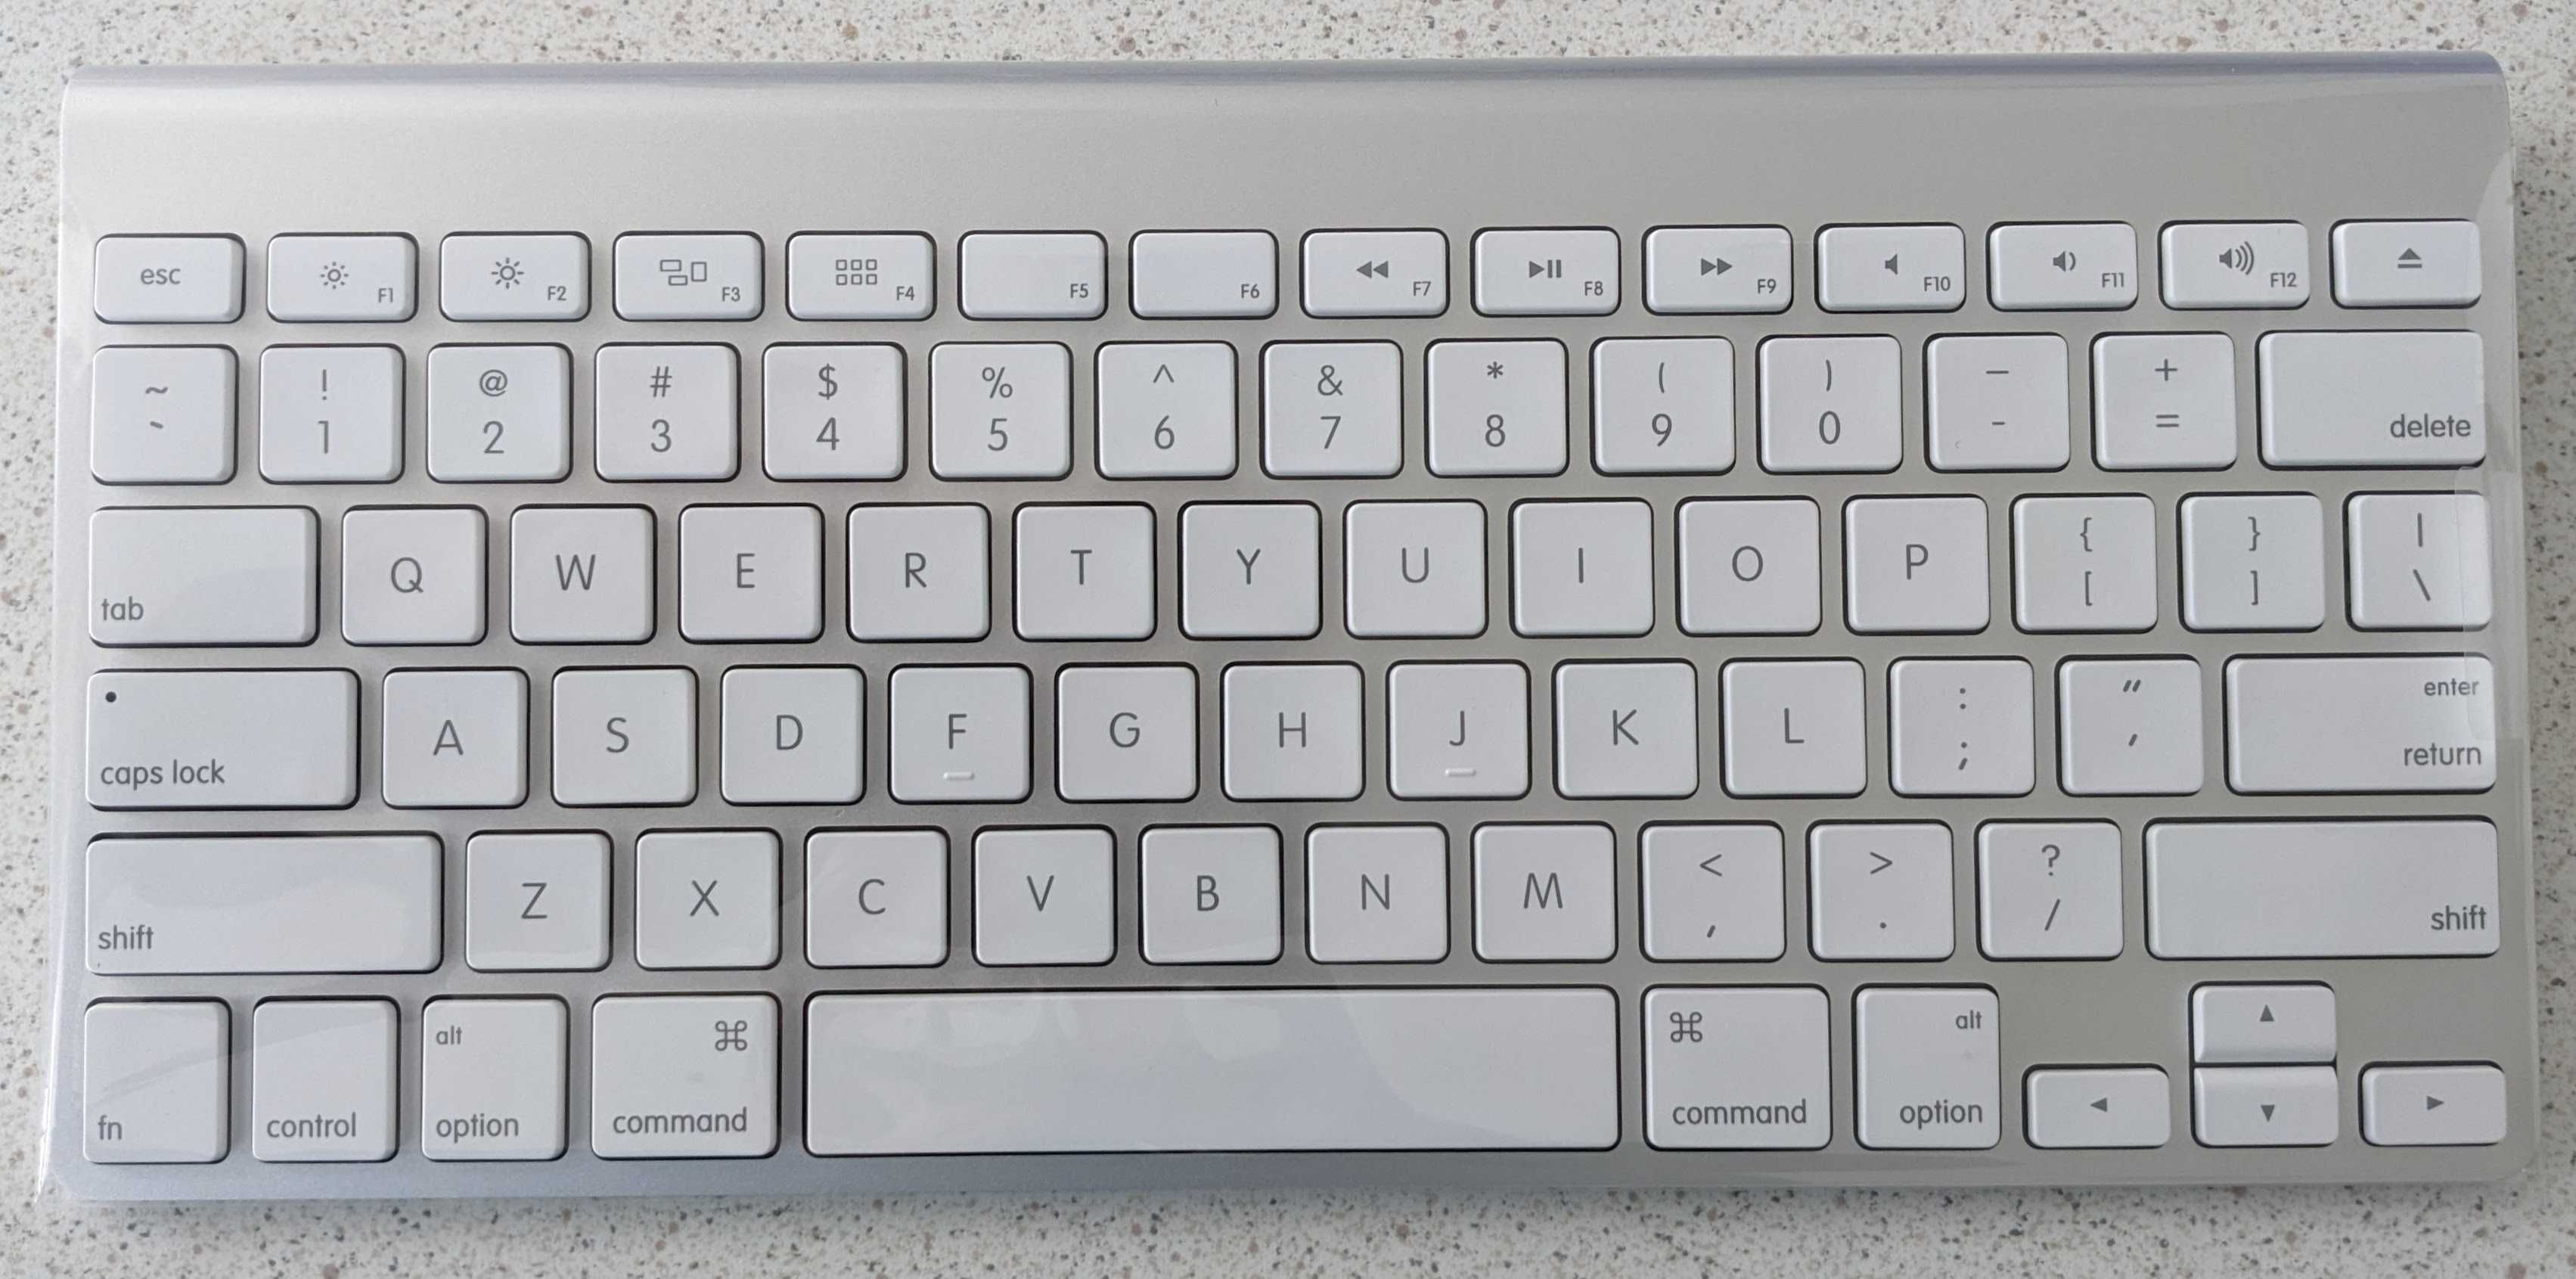 Apple Magic Keyboard, Безжична Клавиатура